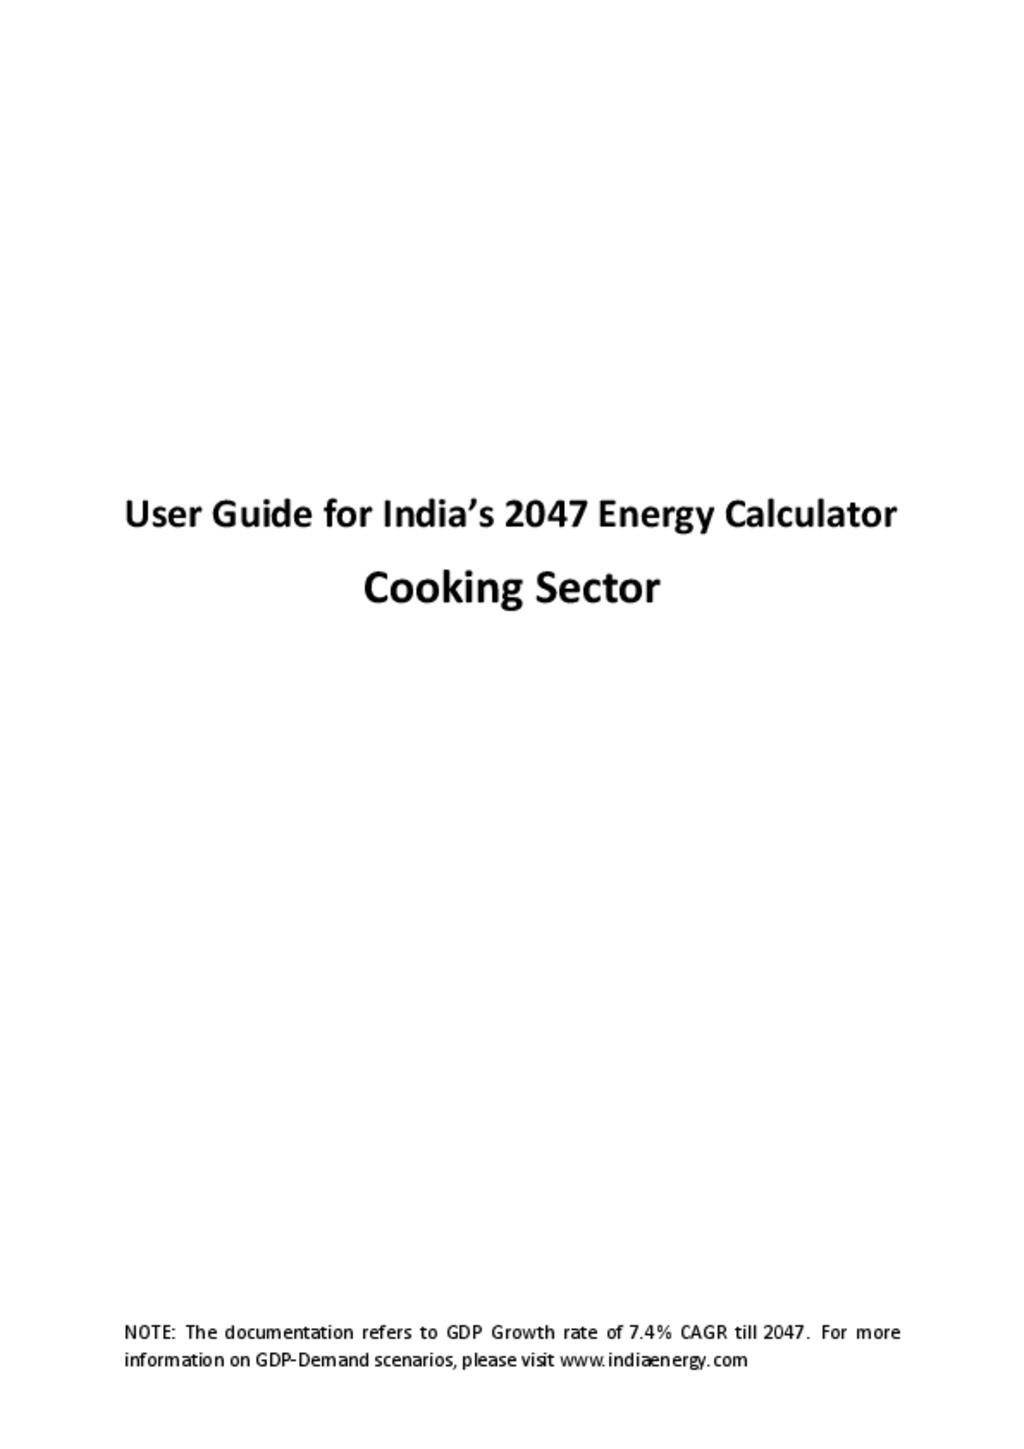 Cooking Energy Calculator